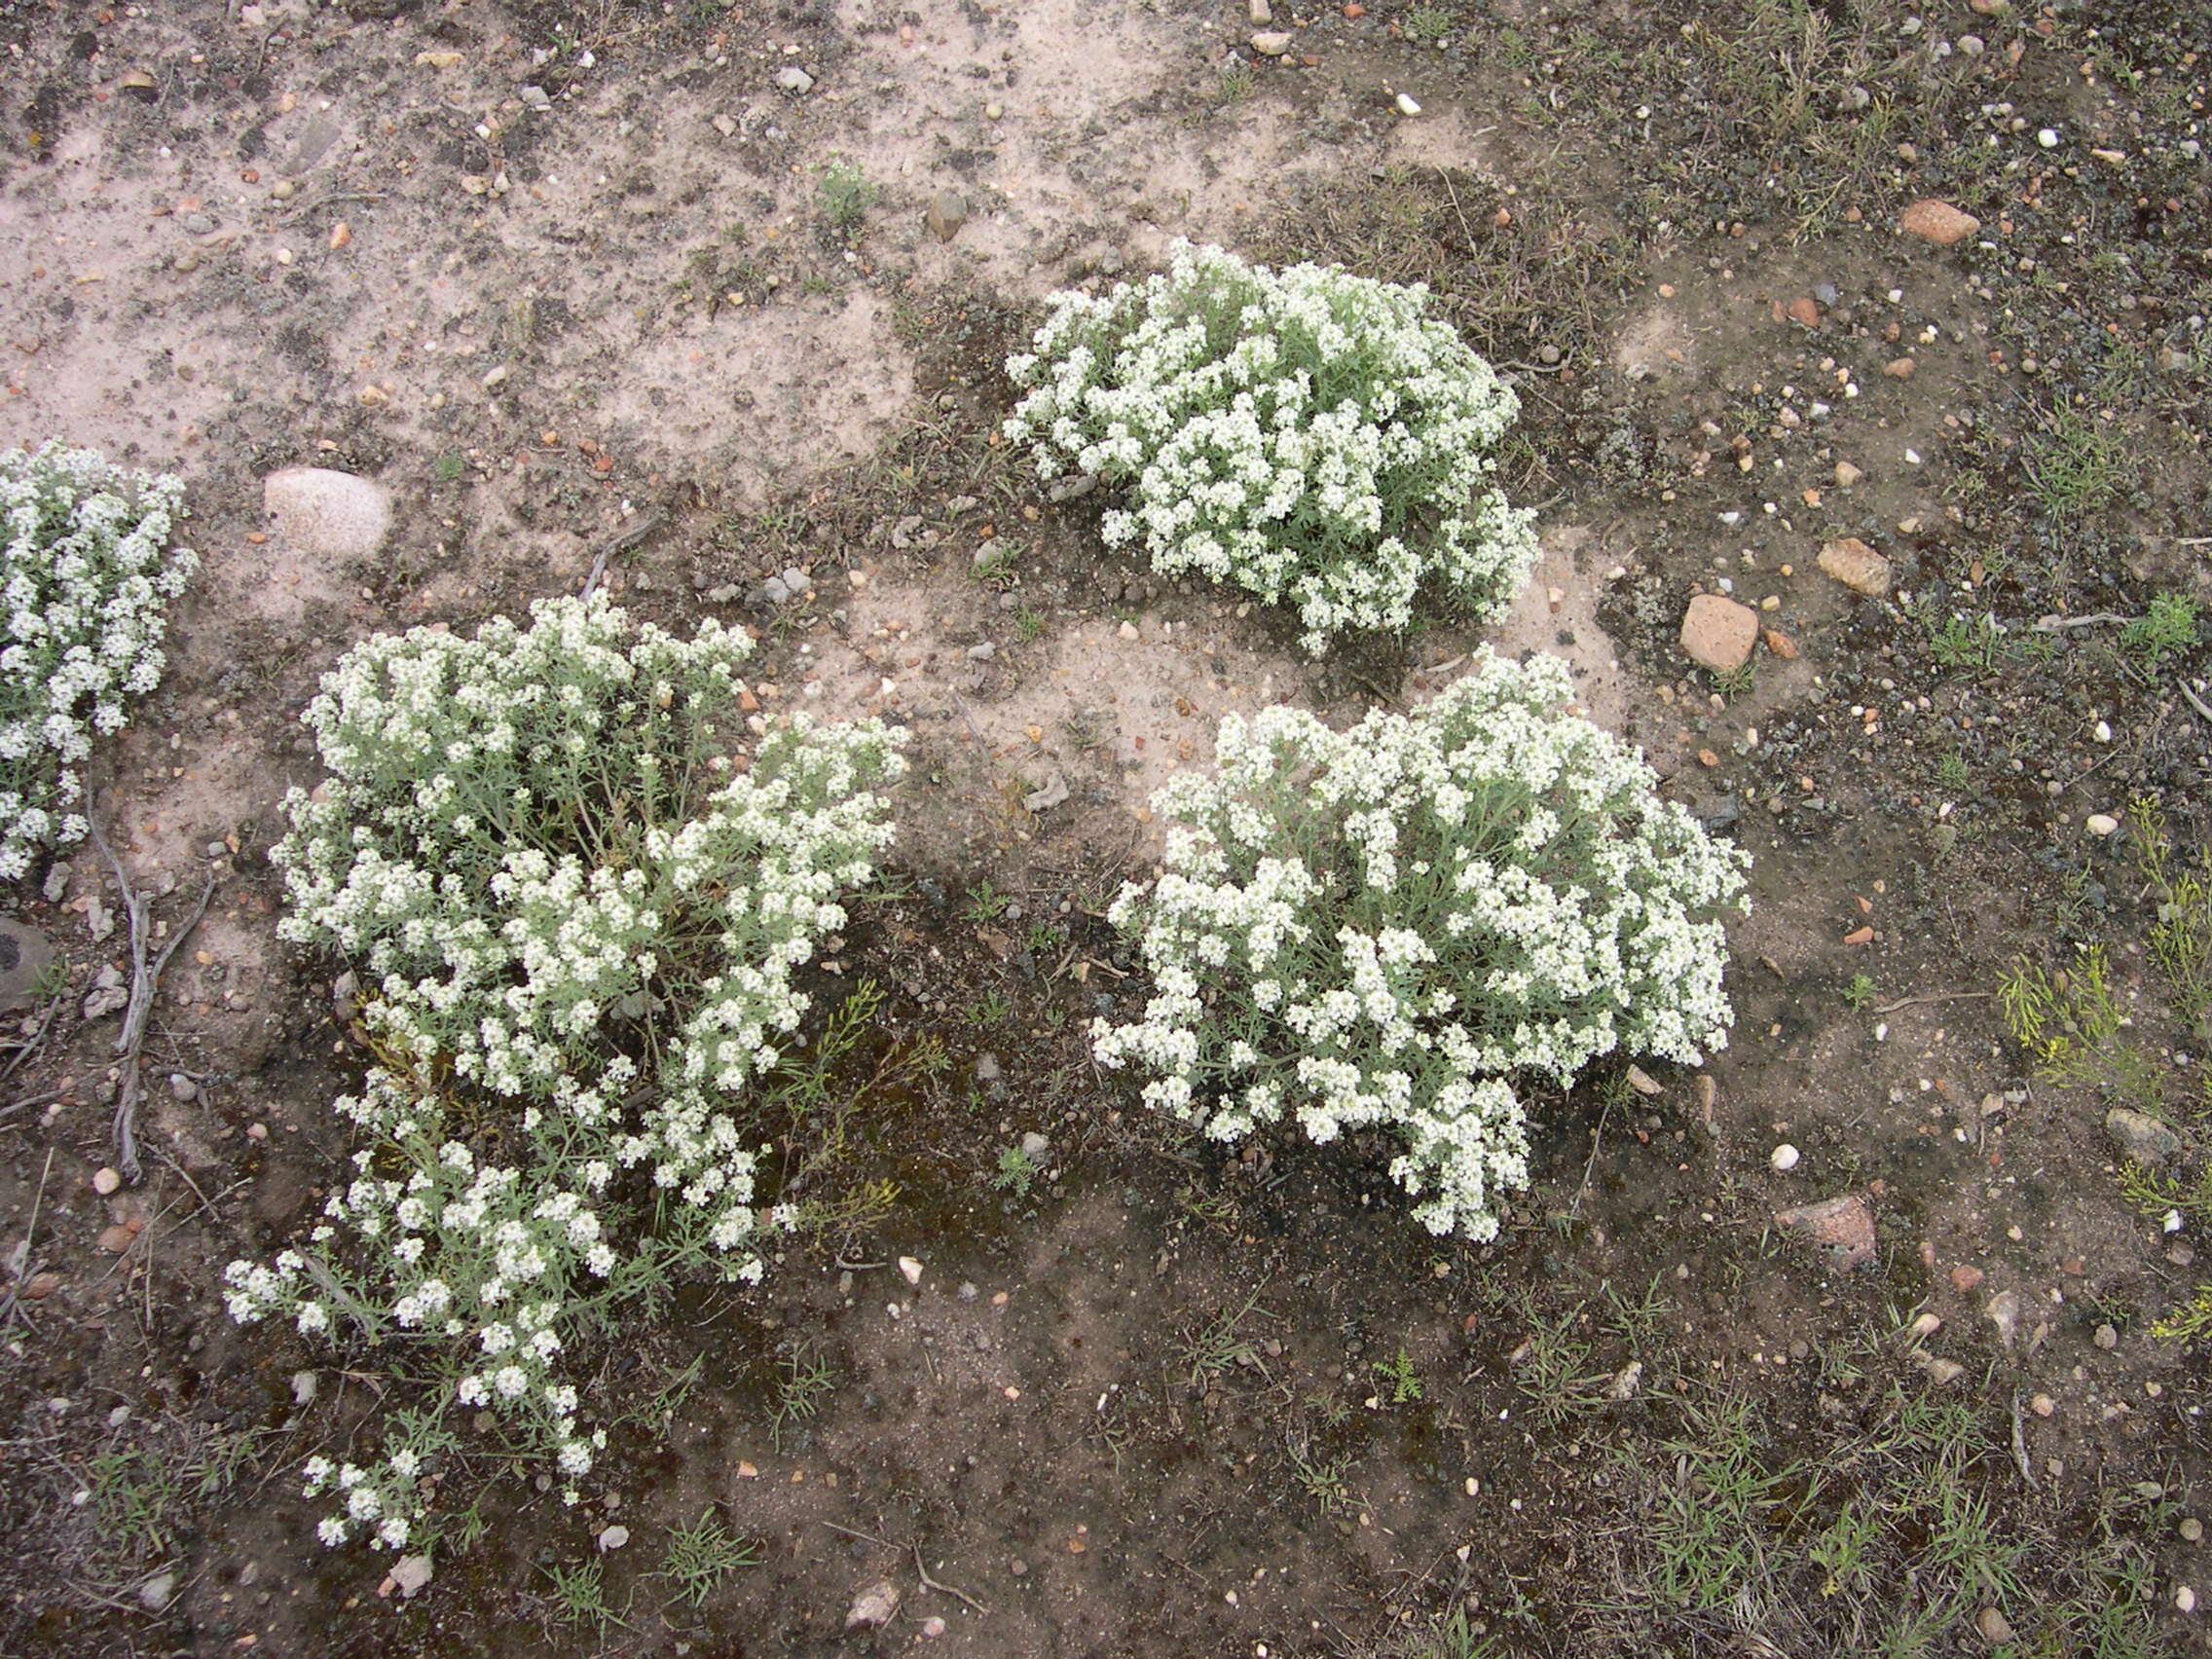 Image of Idaho pepperweed